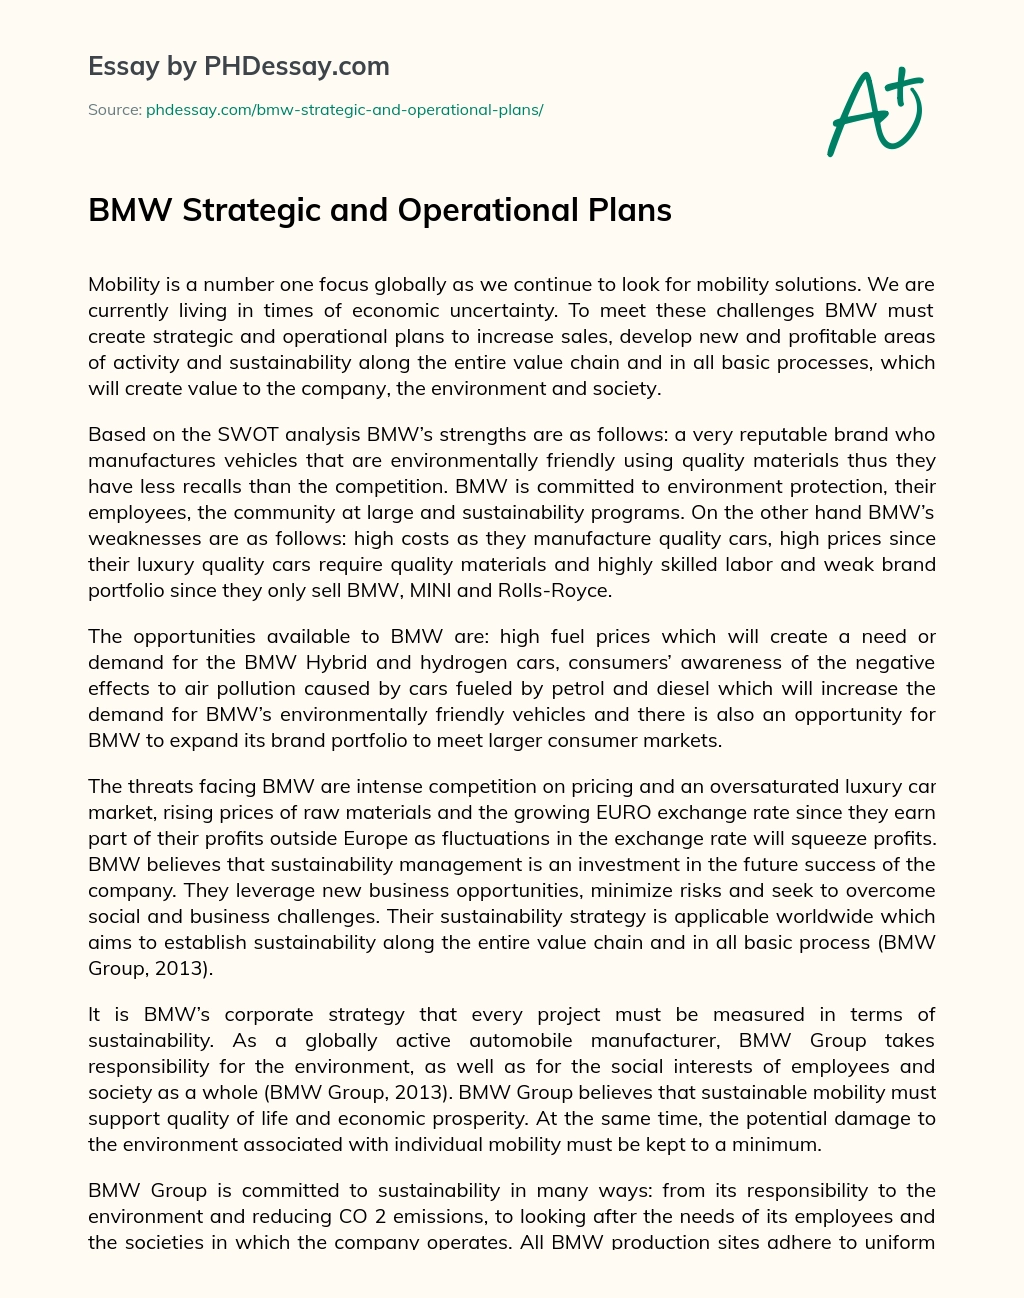 BMW Strategic and Operational Plans essay